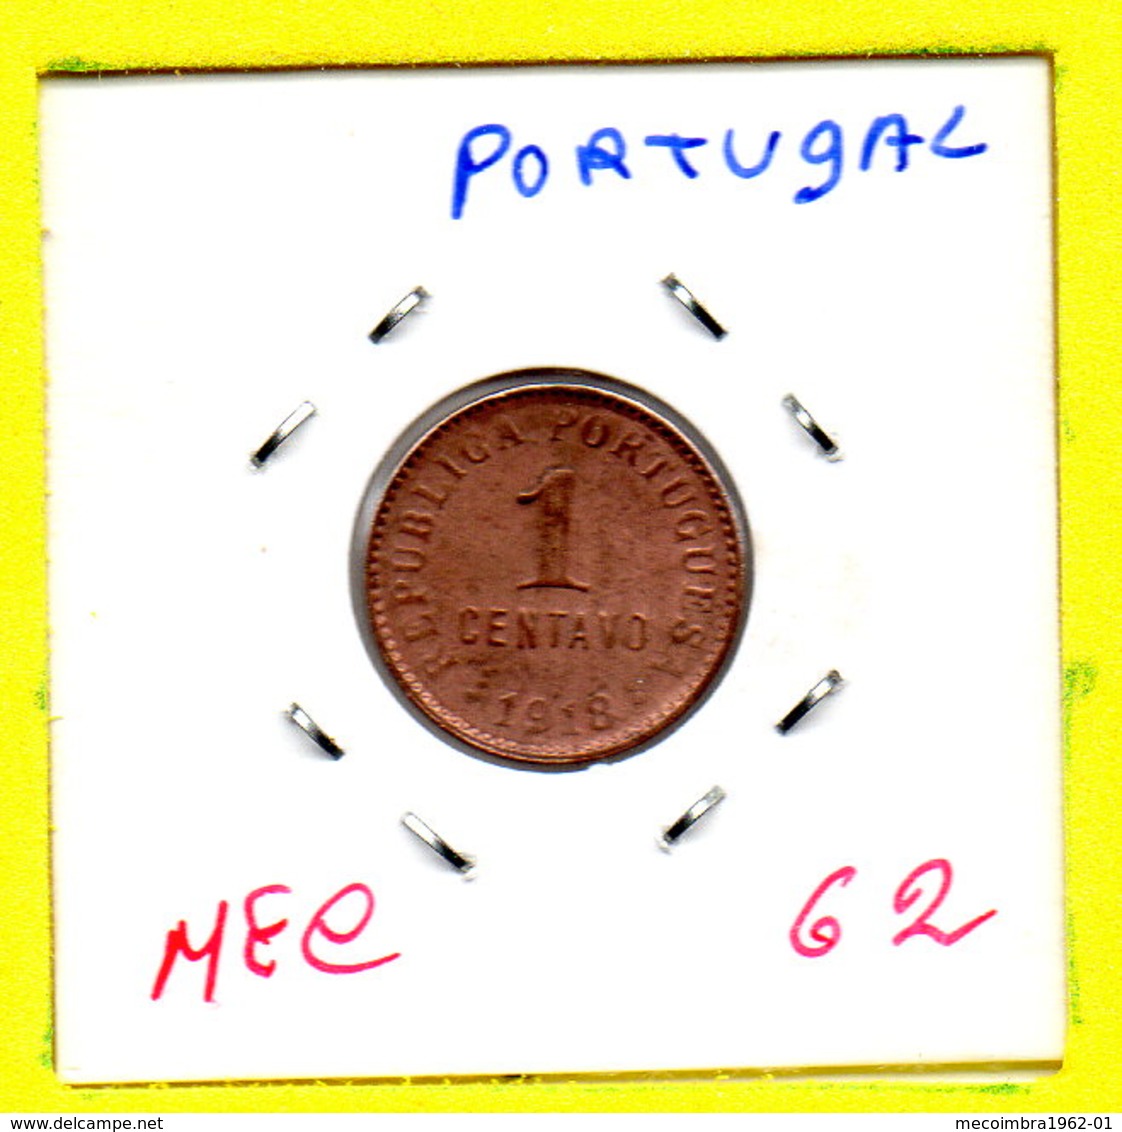 MEC 62 - / Portugal Republica / 1 Centavo 1918 Bronze / Republica - Rare / - L-565 - Portugal